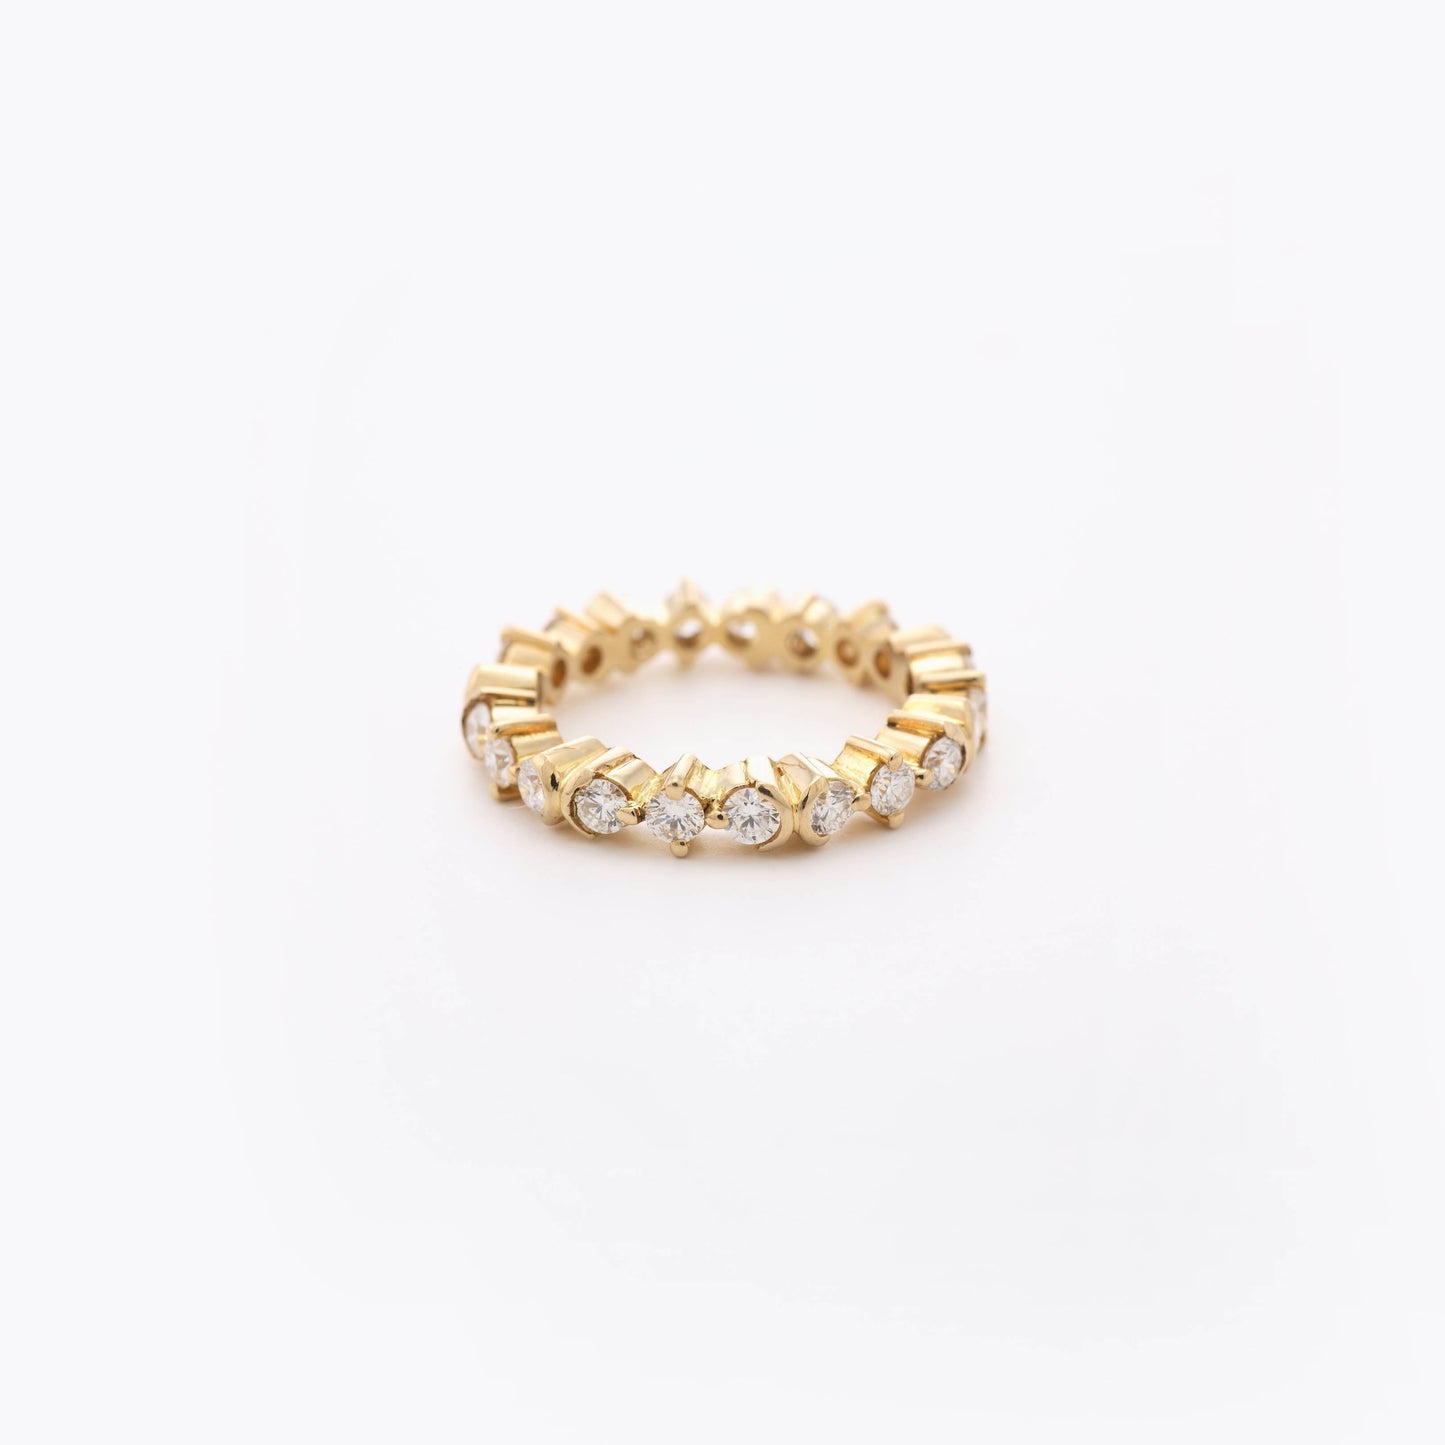 The Nithya Gold and Diamond Ring by Rasvihar